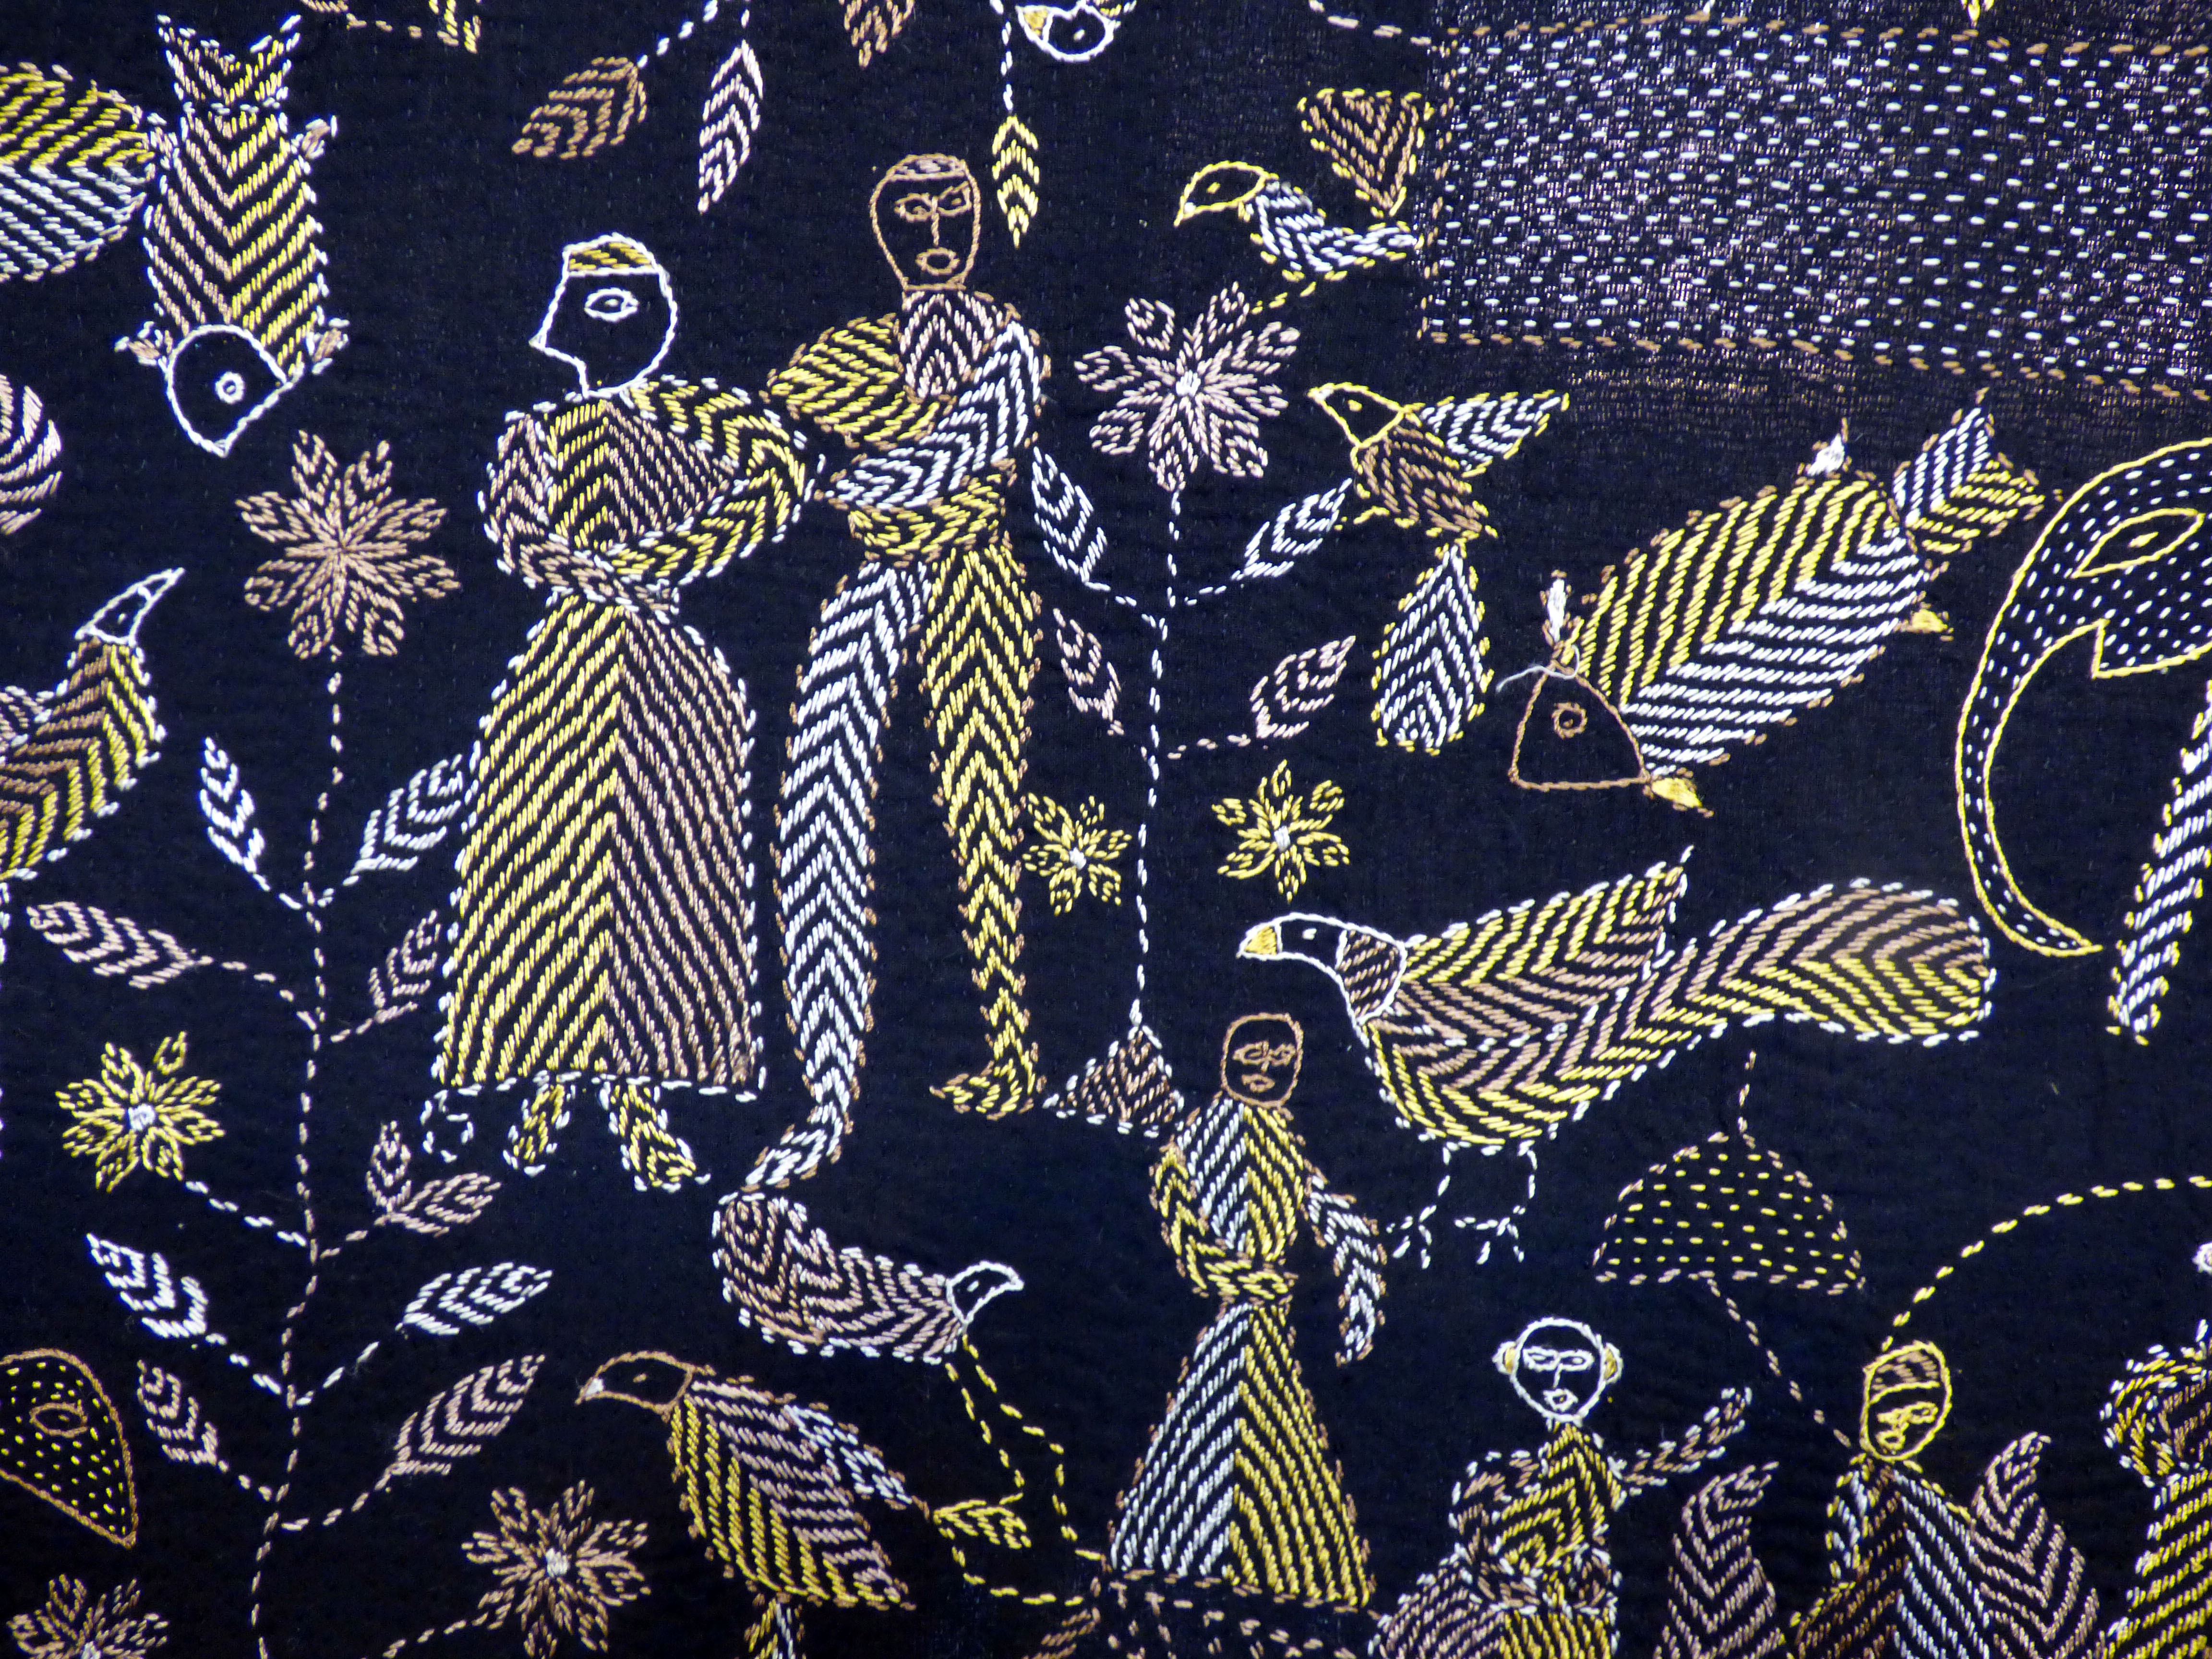 detail of kantha embroidery by women of Bangladesh at Threading Dreams exhibition at St Barnabus, April 2016